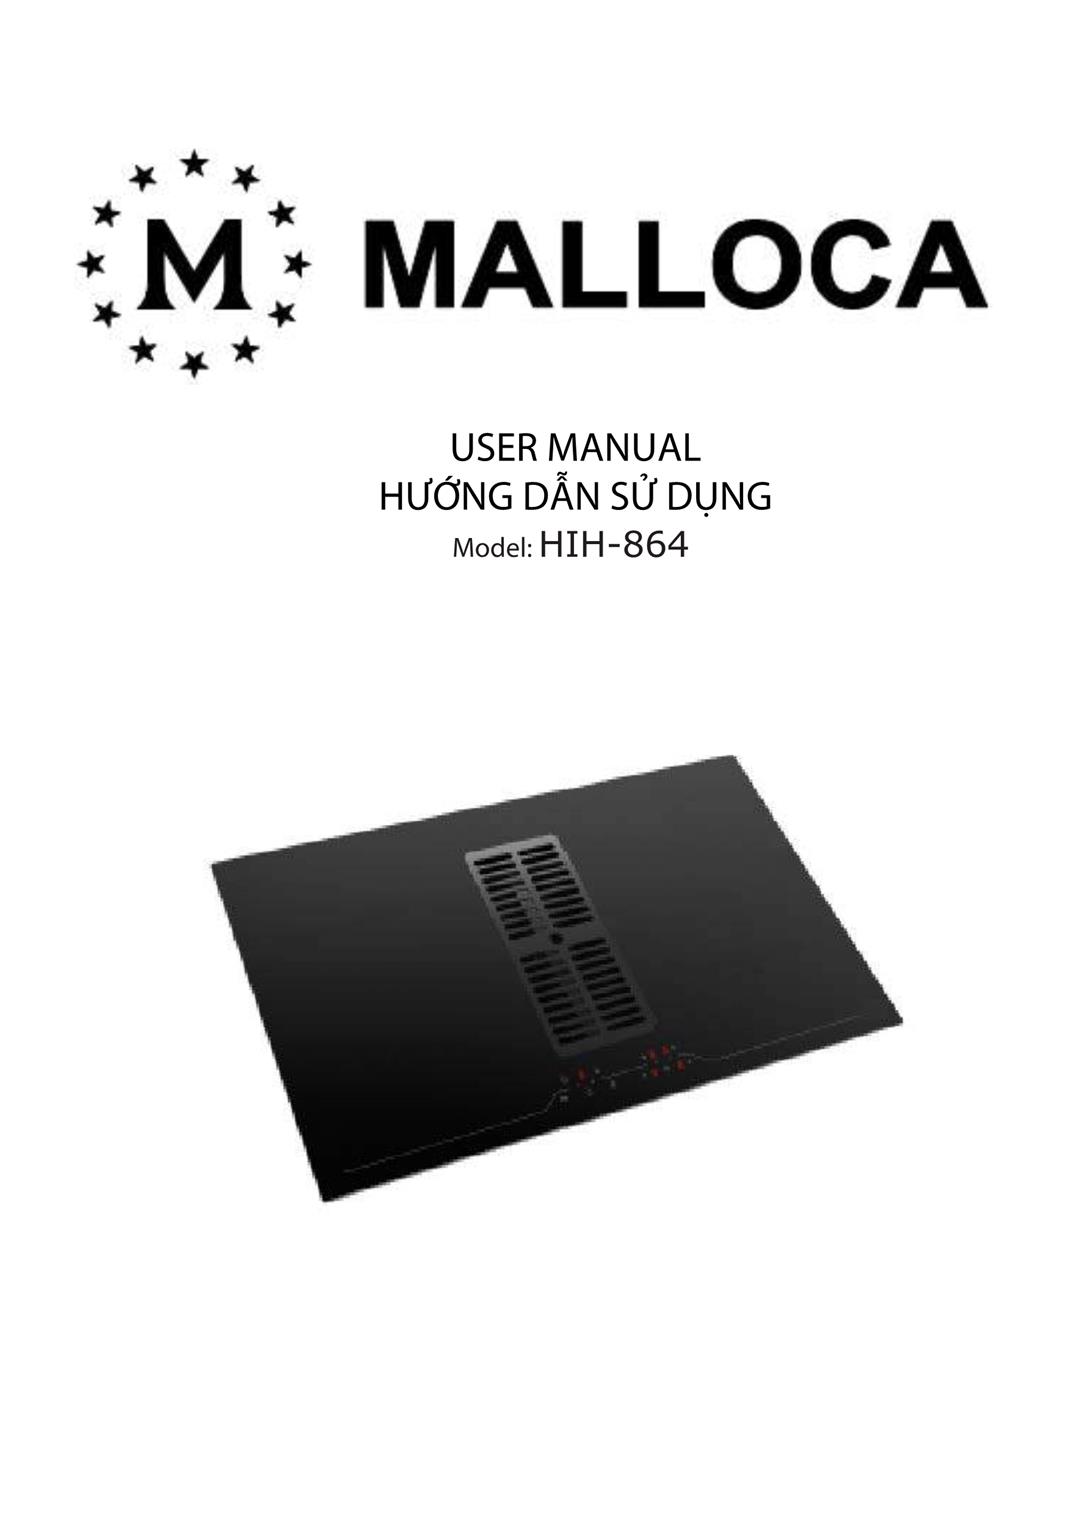 Hướng dẫn sử dụng Malloca HIH-864